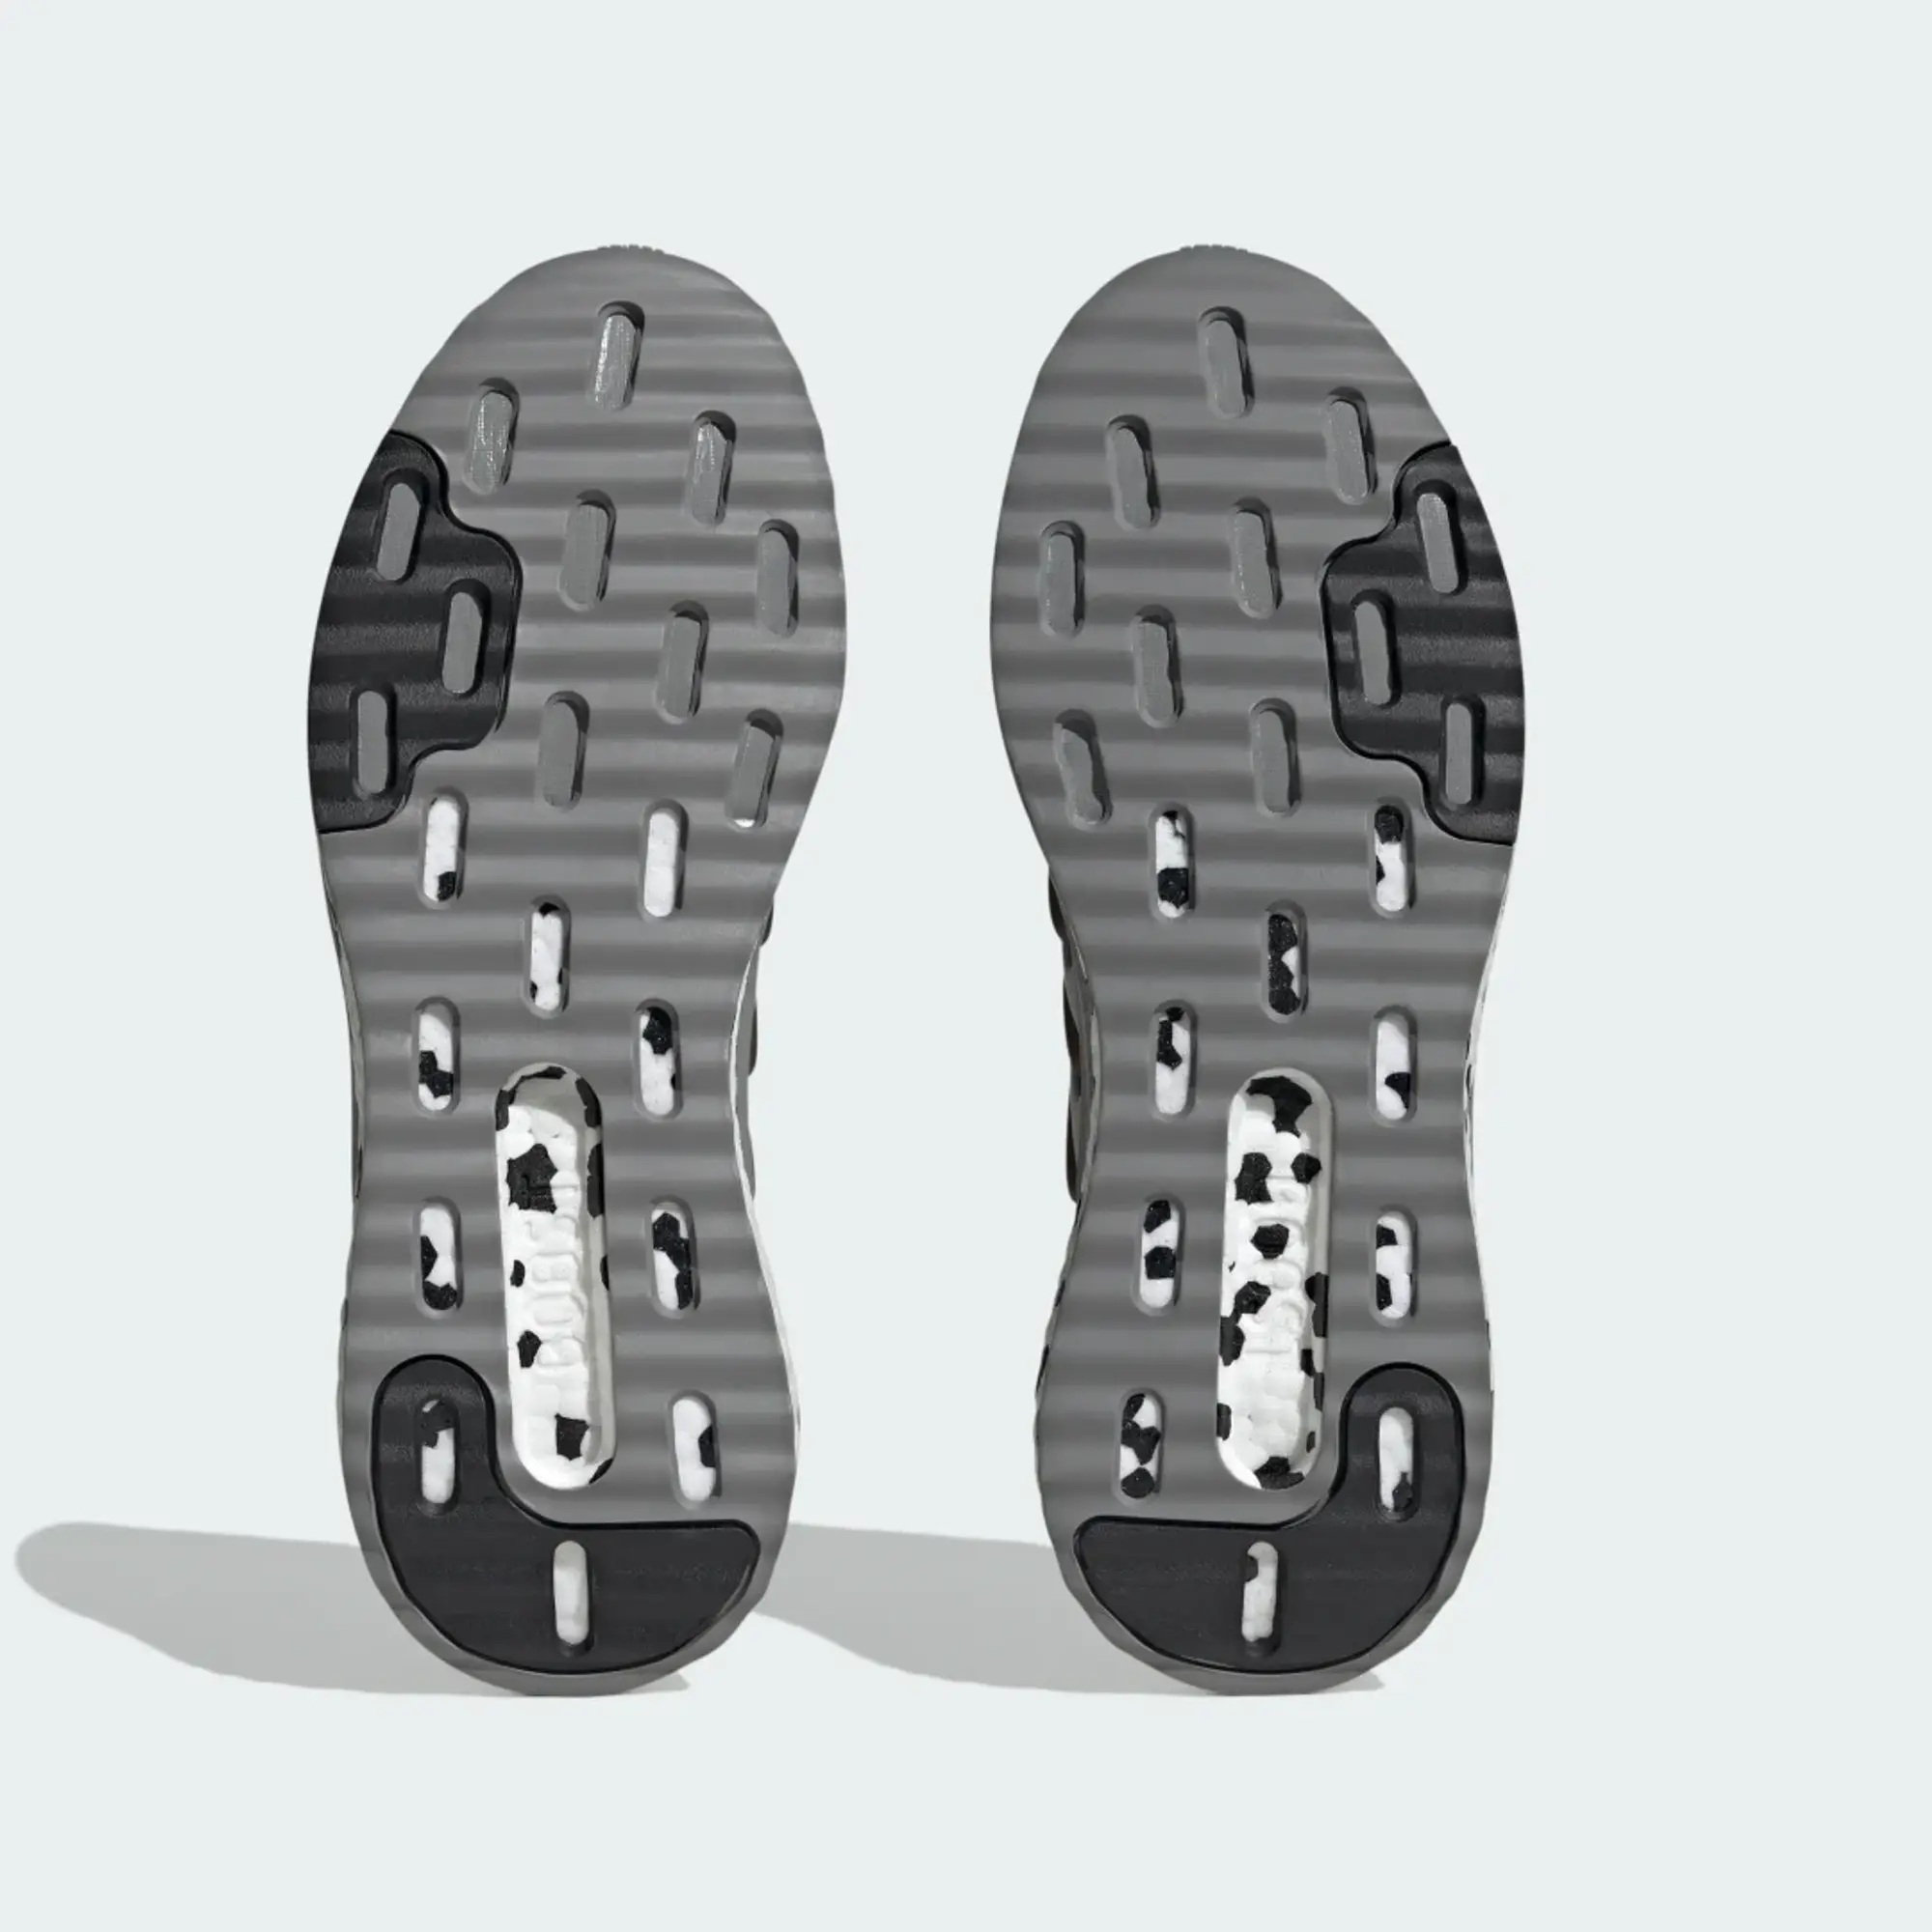 adidas X_PLRPHASE Shoes - Grey Three / Core Black / Cloud White